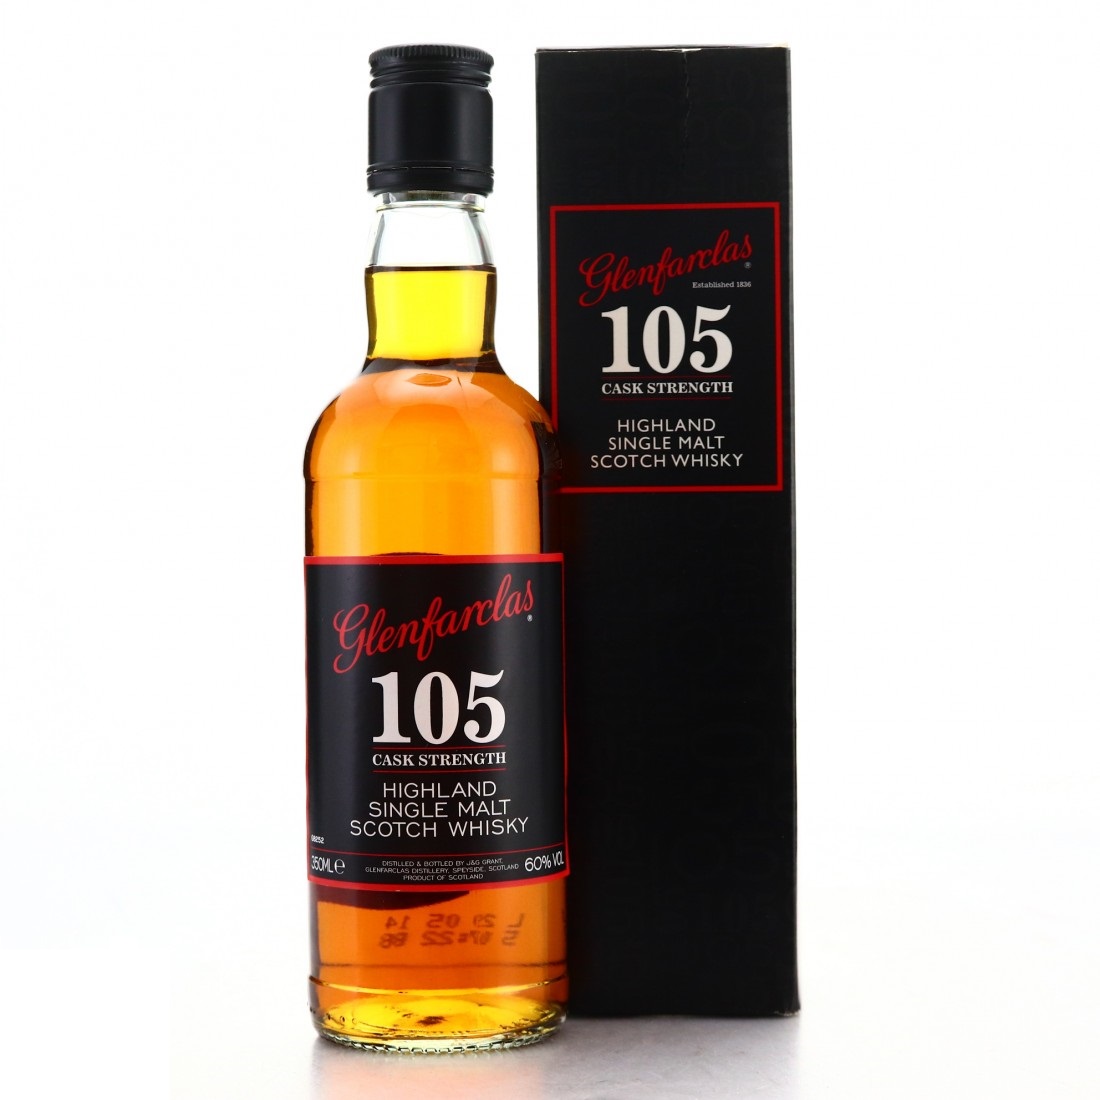 Glenfarclas 105 Cask Strength Highland Single Malt Scotch Whisky 350ml – Speyside, Scotland